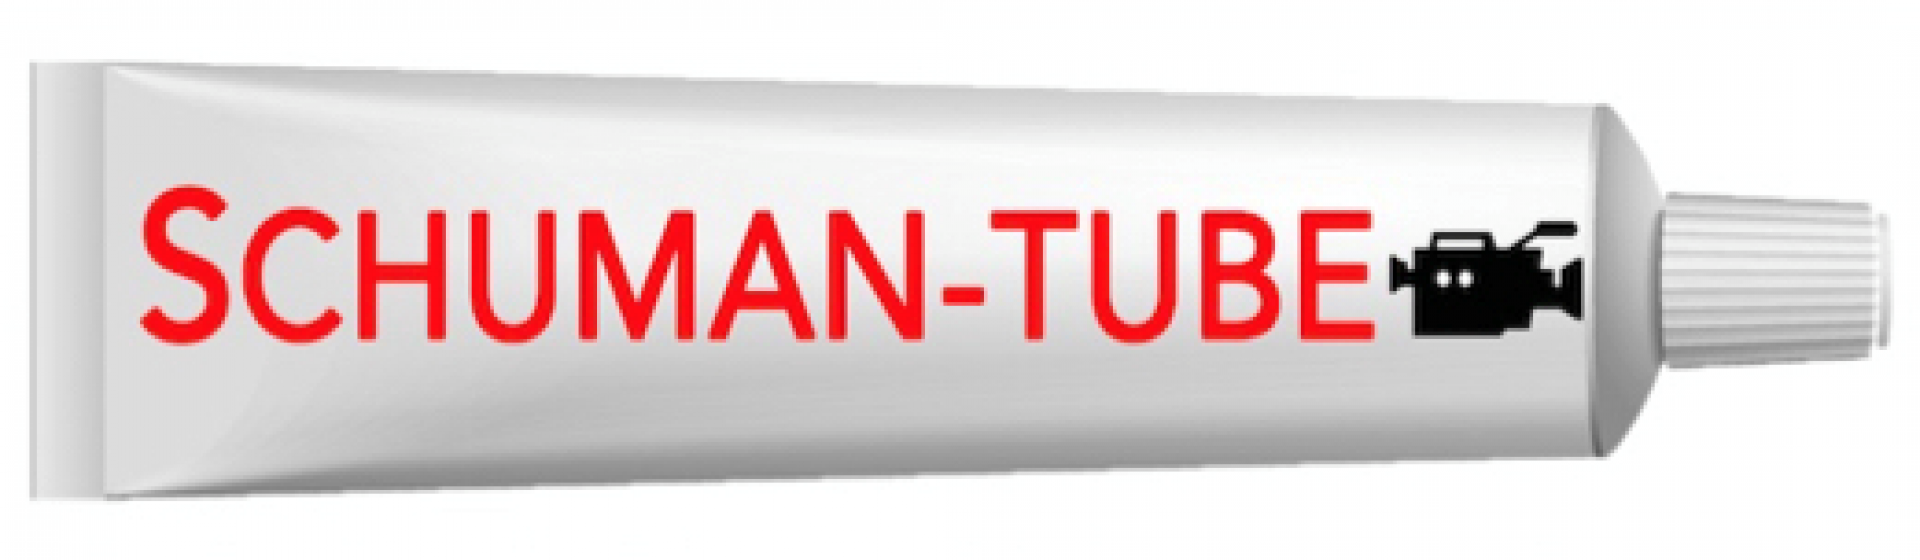 Schuman Tube Logo